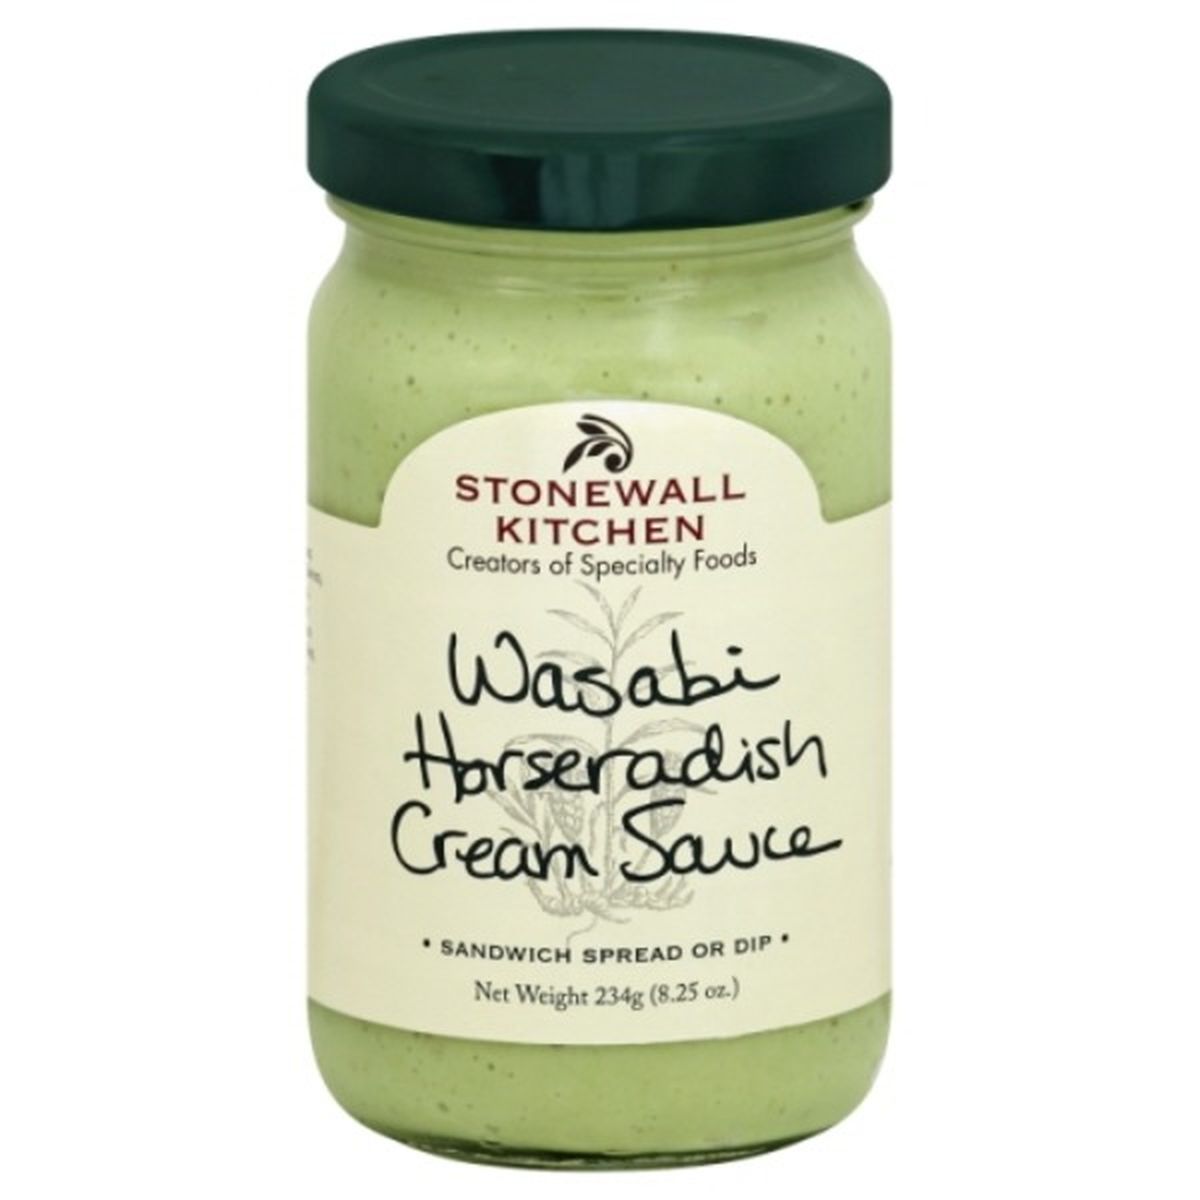 Calories in Stonewall Kitchen Cream Sauce, Wasabi Horseradish